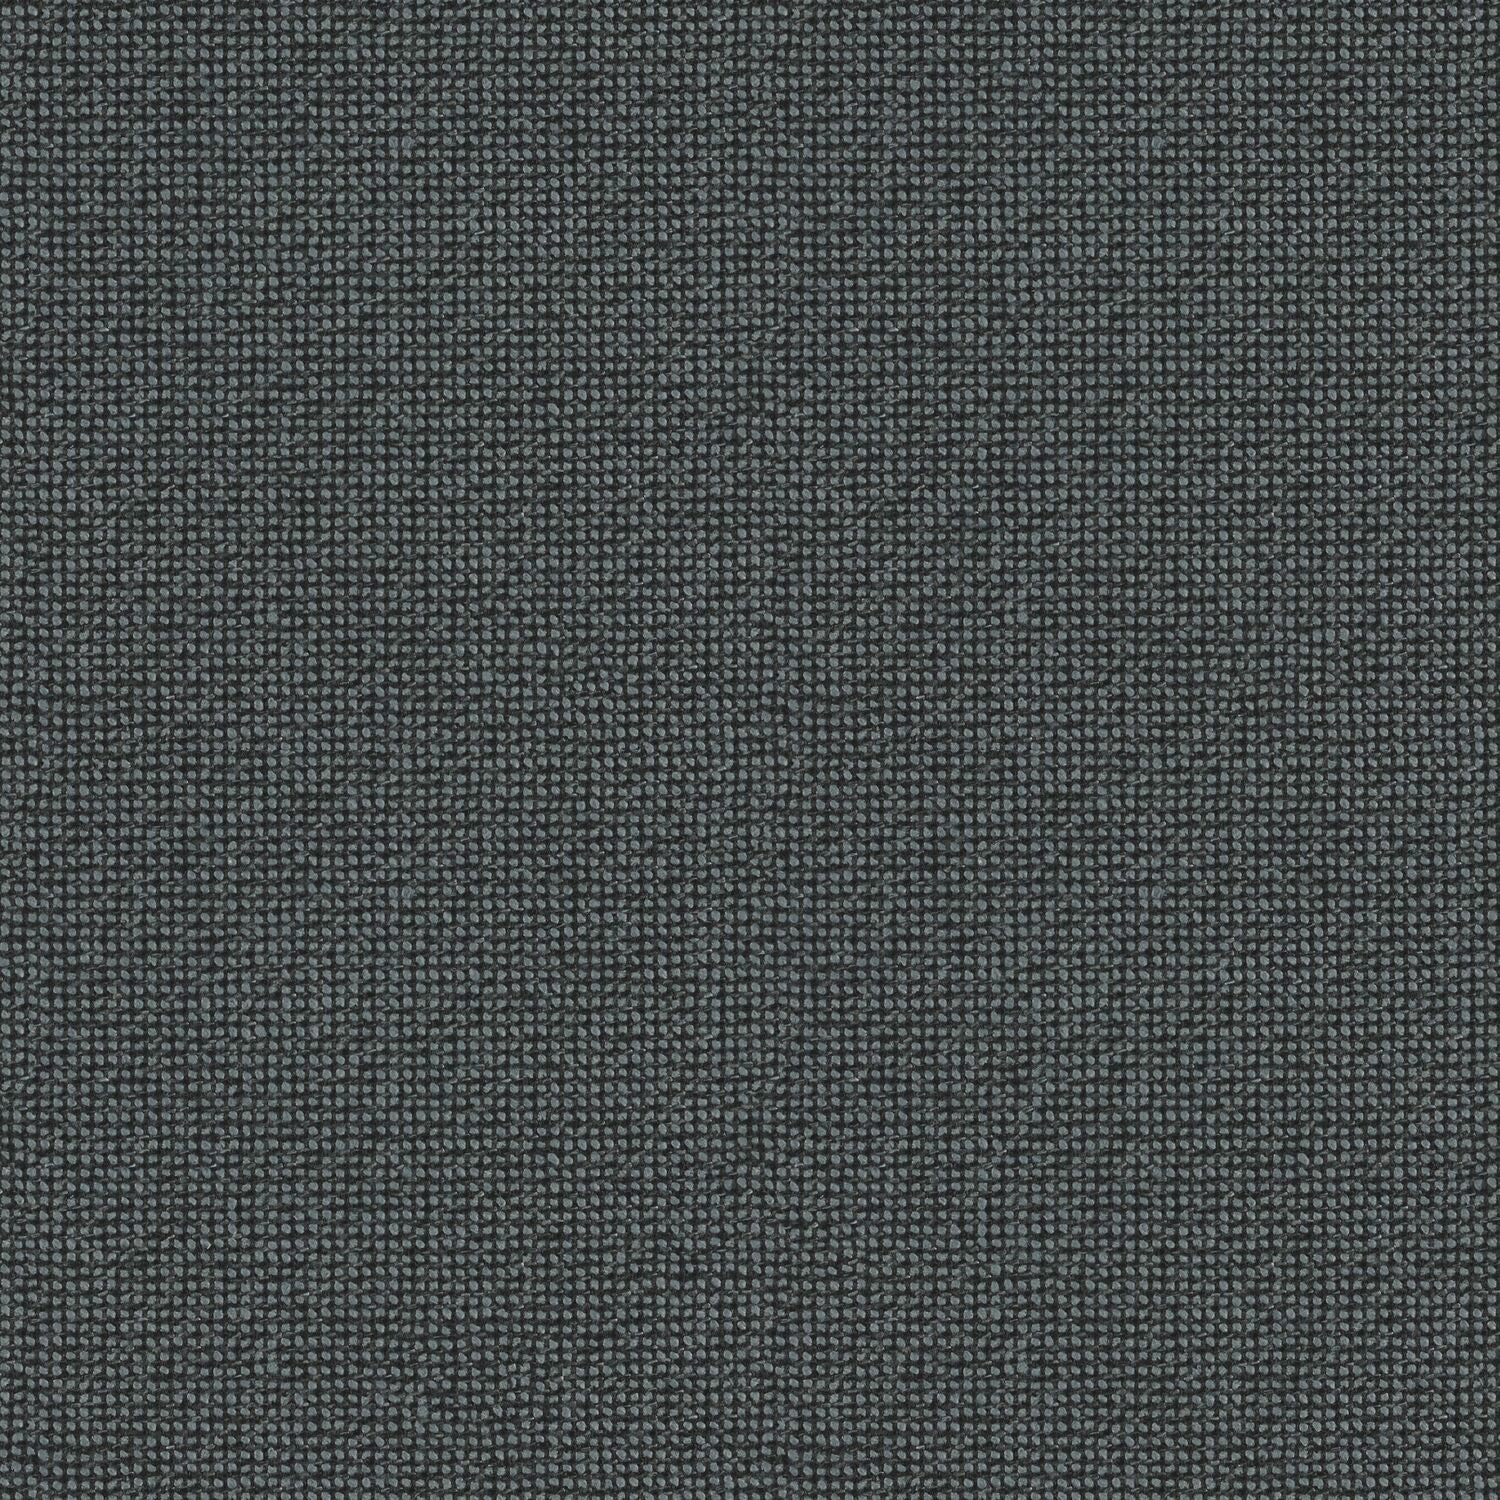 Twisted Tweed - Wrought Iron - 4096 - 01 - Half Yard